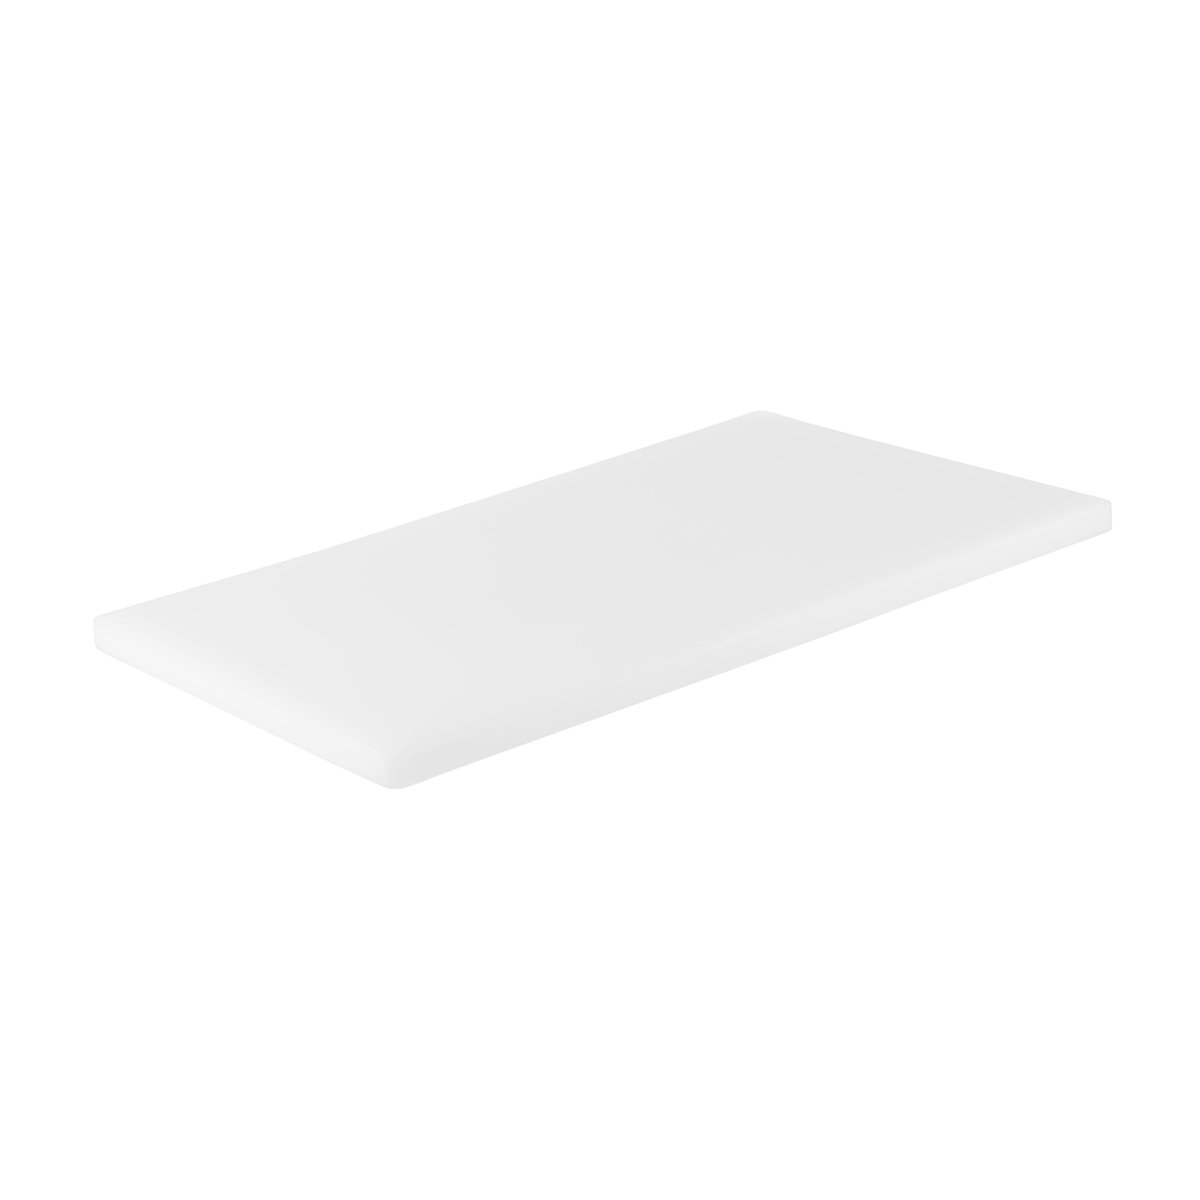 04362 Chef Inox Cutting Board Polyethylene White 450x610x19mm Tomkin Australia Hospitality Supplies